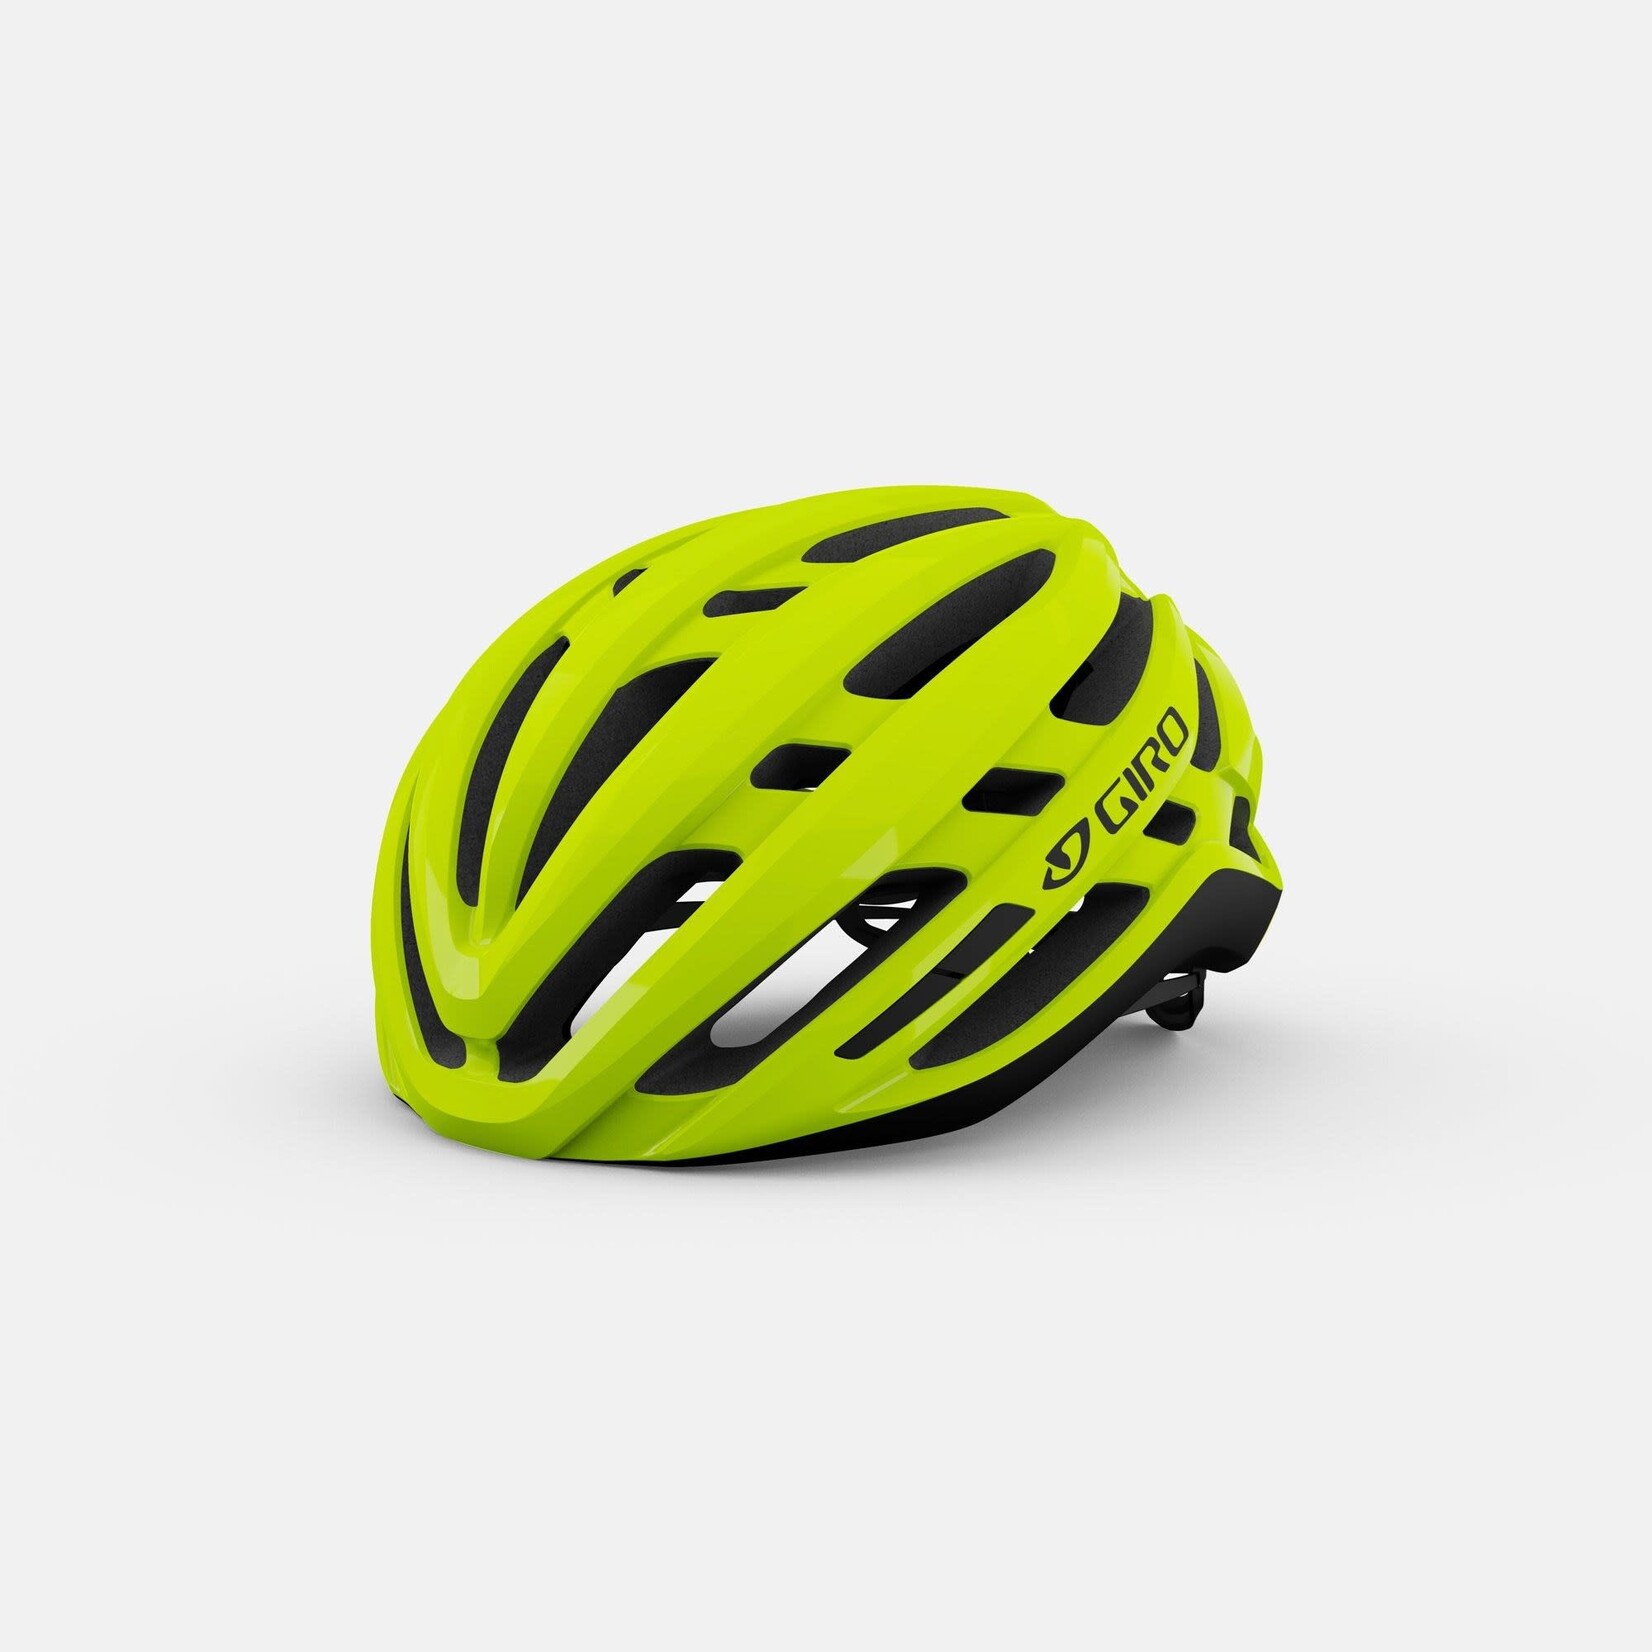 Giro Agilis MIPS Road Helmet - Highlight Yellow (M) 55-59cm